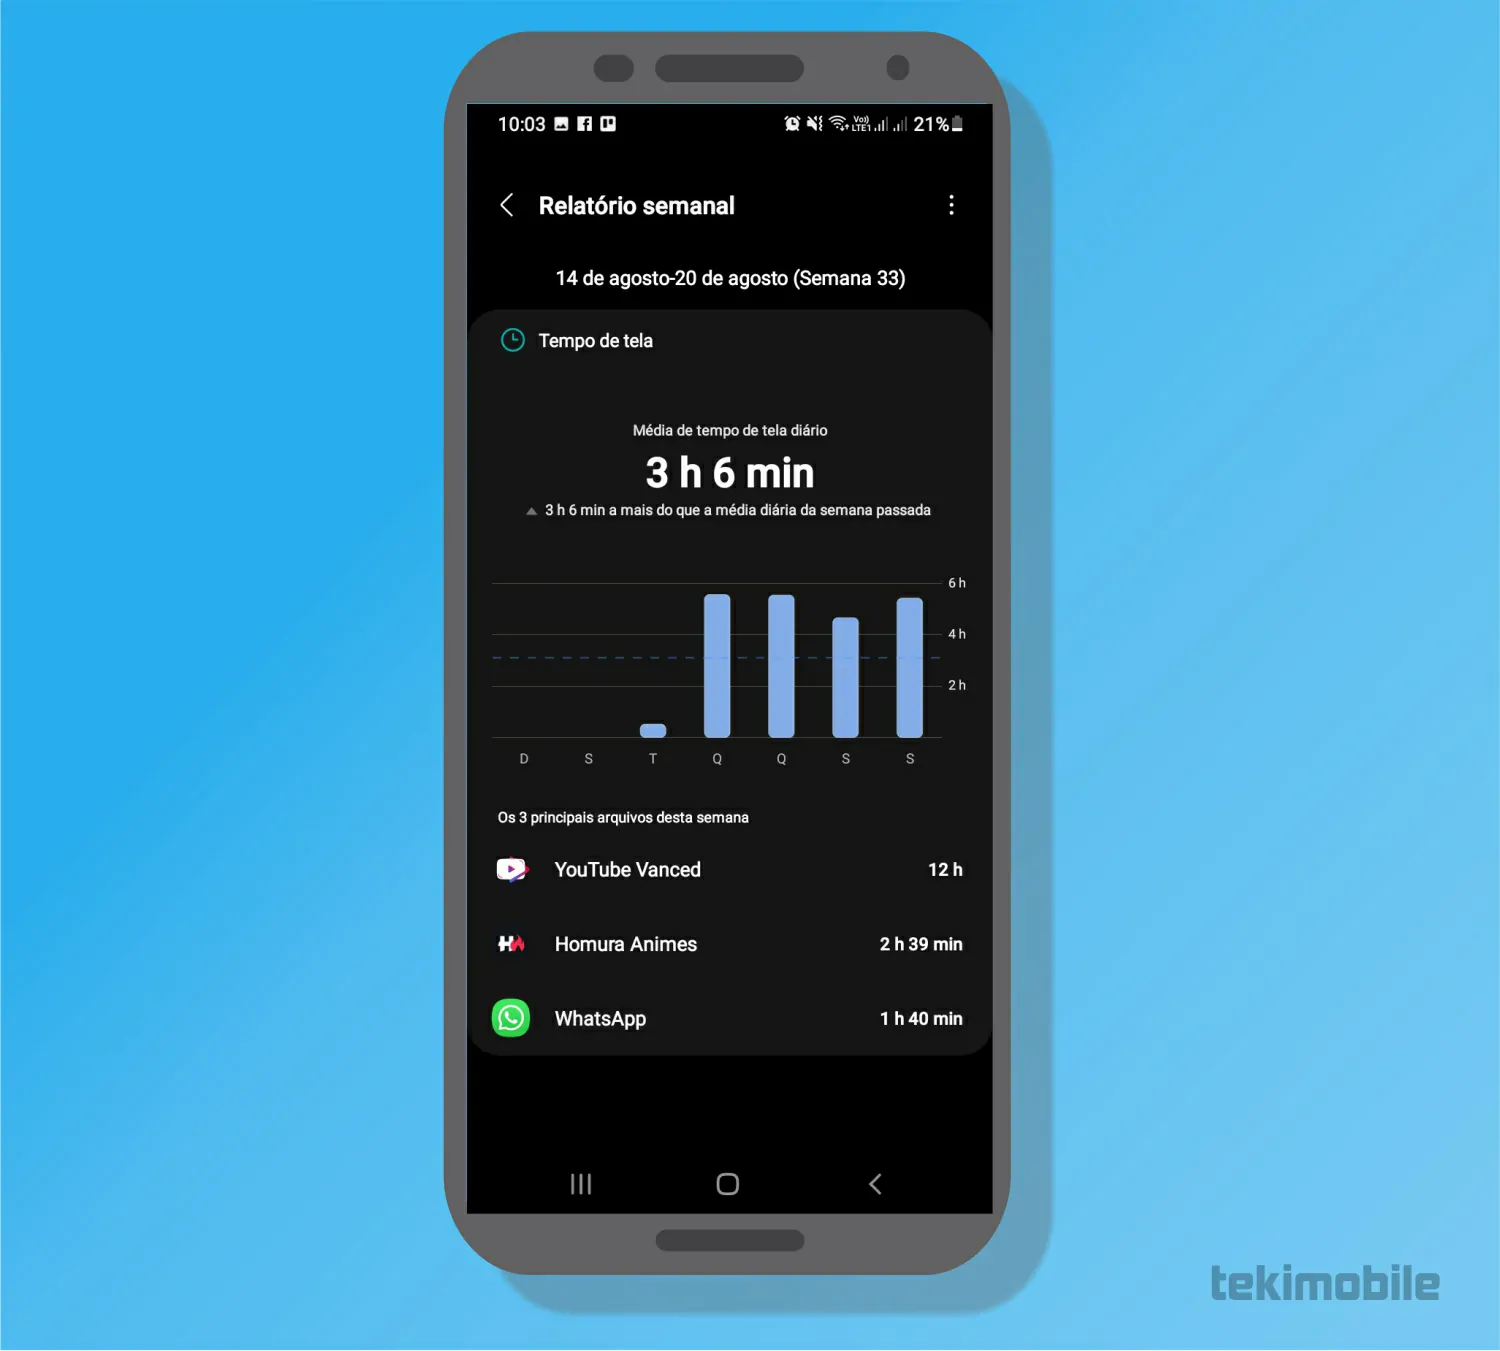 Selecione as barras - Como saber tempo gasto no celular [Android e iPhone]